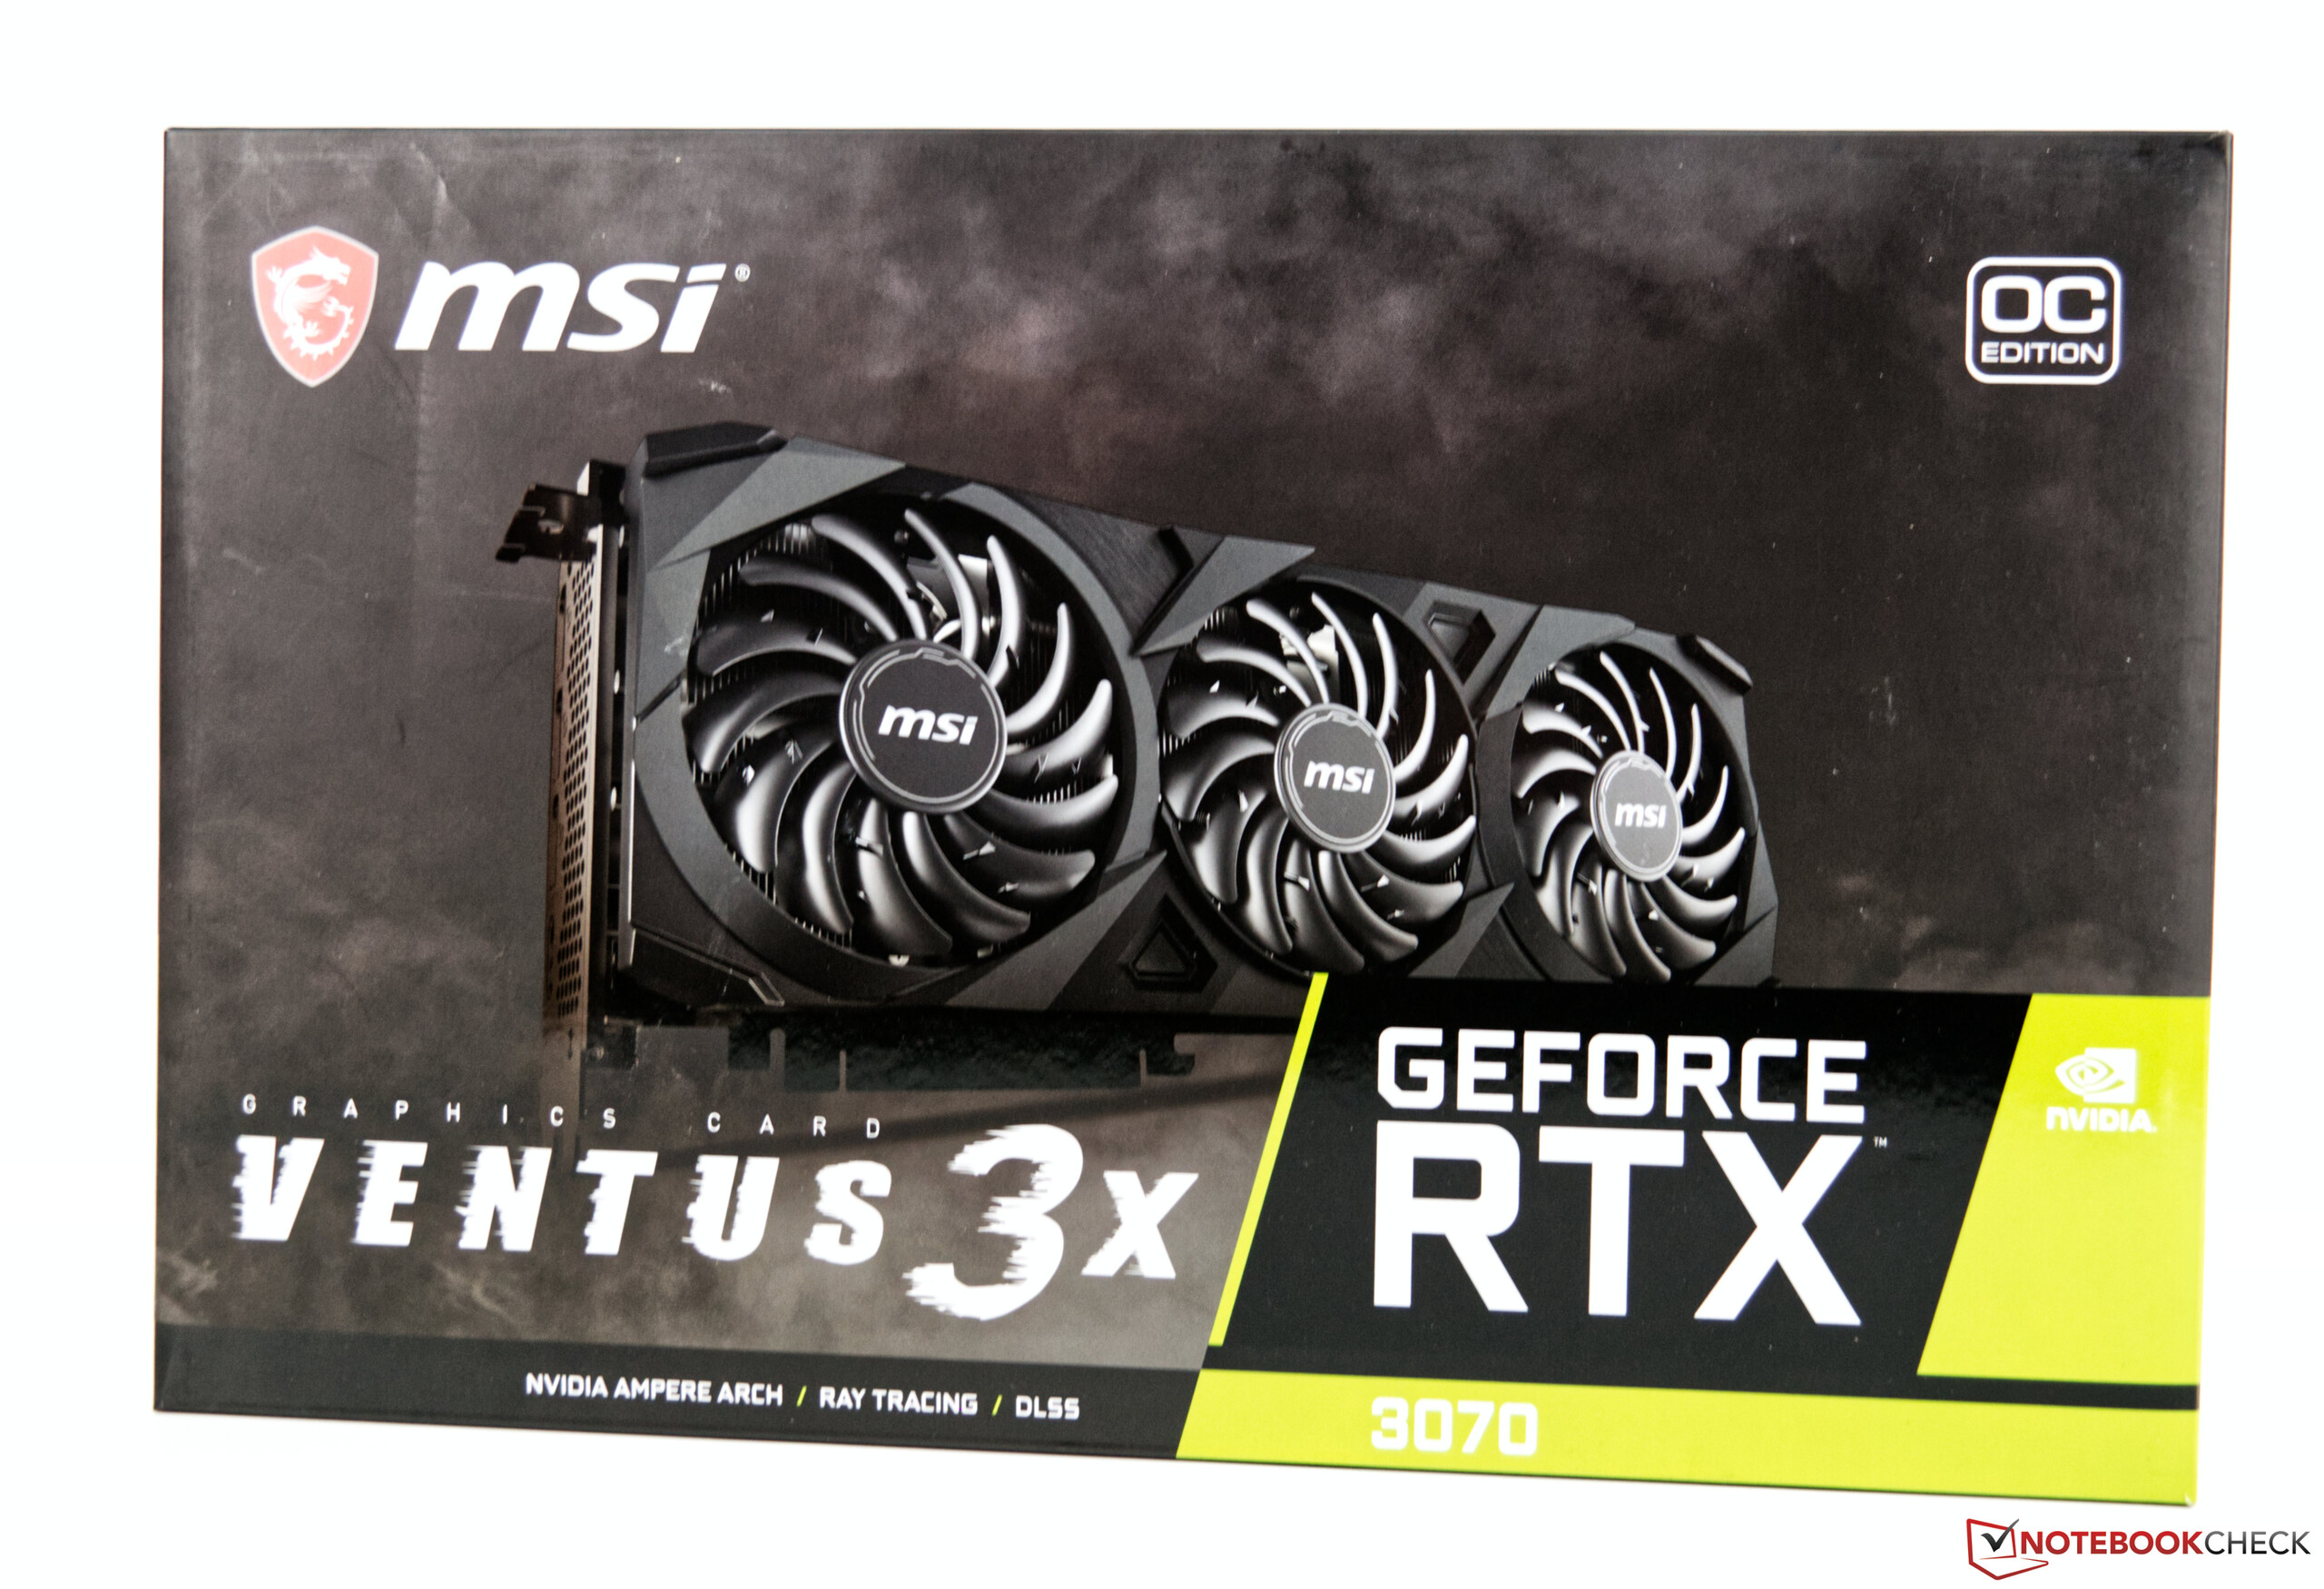 MSI GeForce RTX 3070 Ventus 3X OC desktop graphics card in review